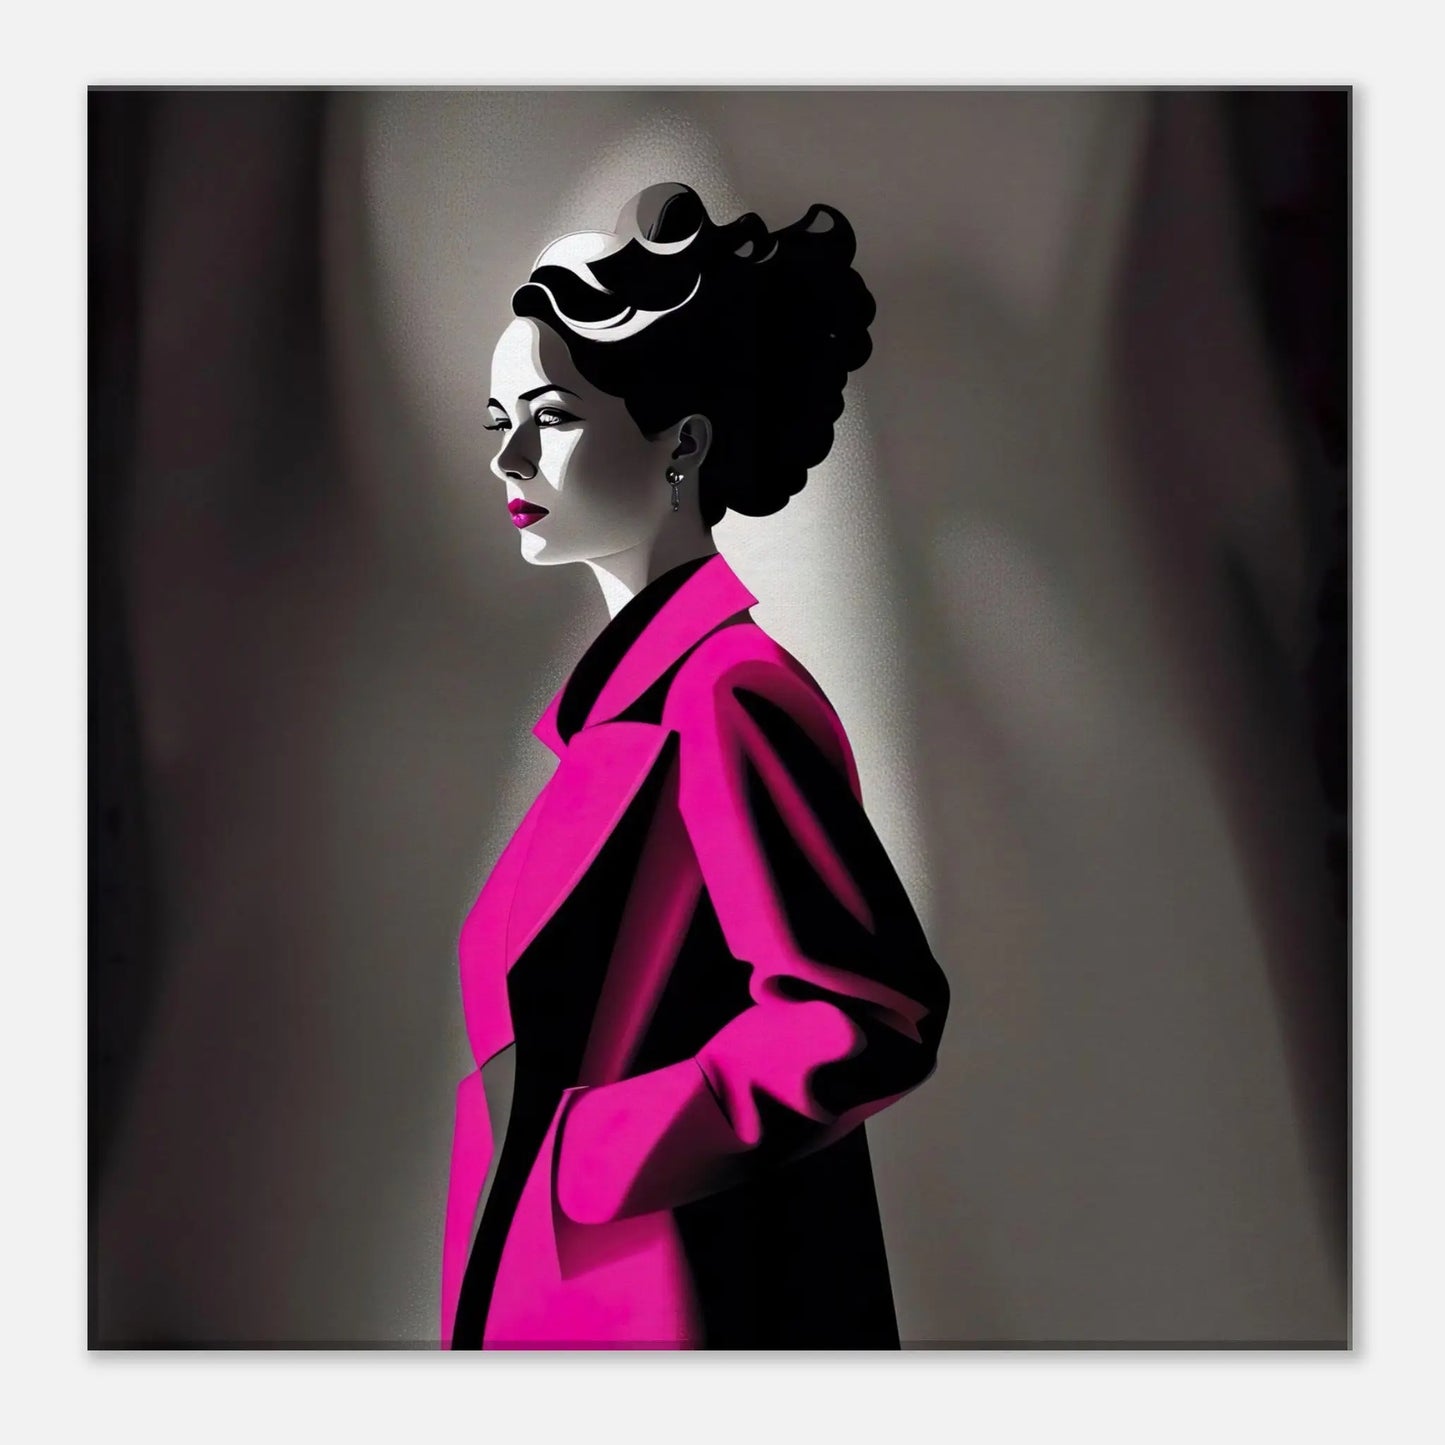 Leinwandbild - Frau im rosa Mantel - Schwarz-Weiß Stil, KI-Kunst - RolConArt, Schwarz-Weiß mit Akzentfarben, 40x40-cm-16x16